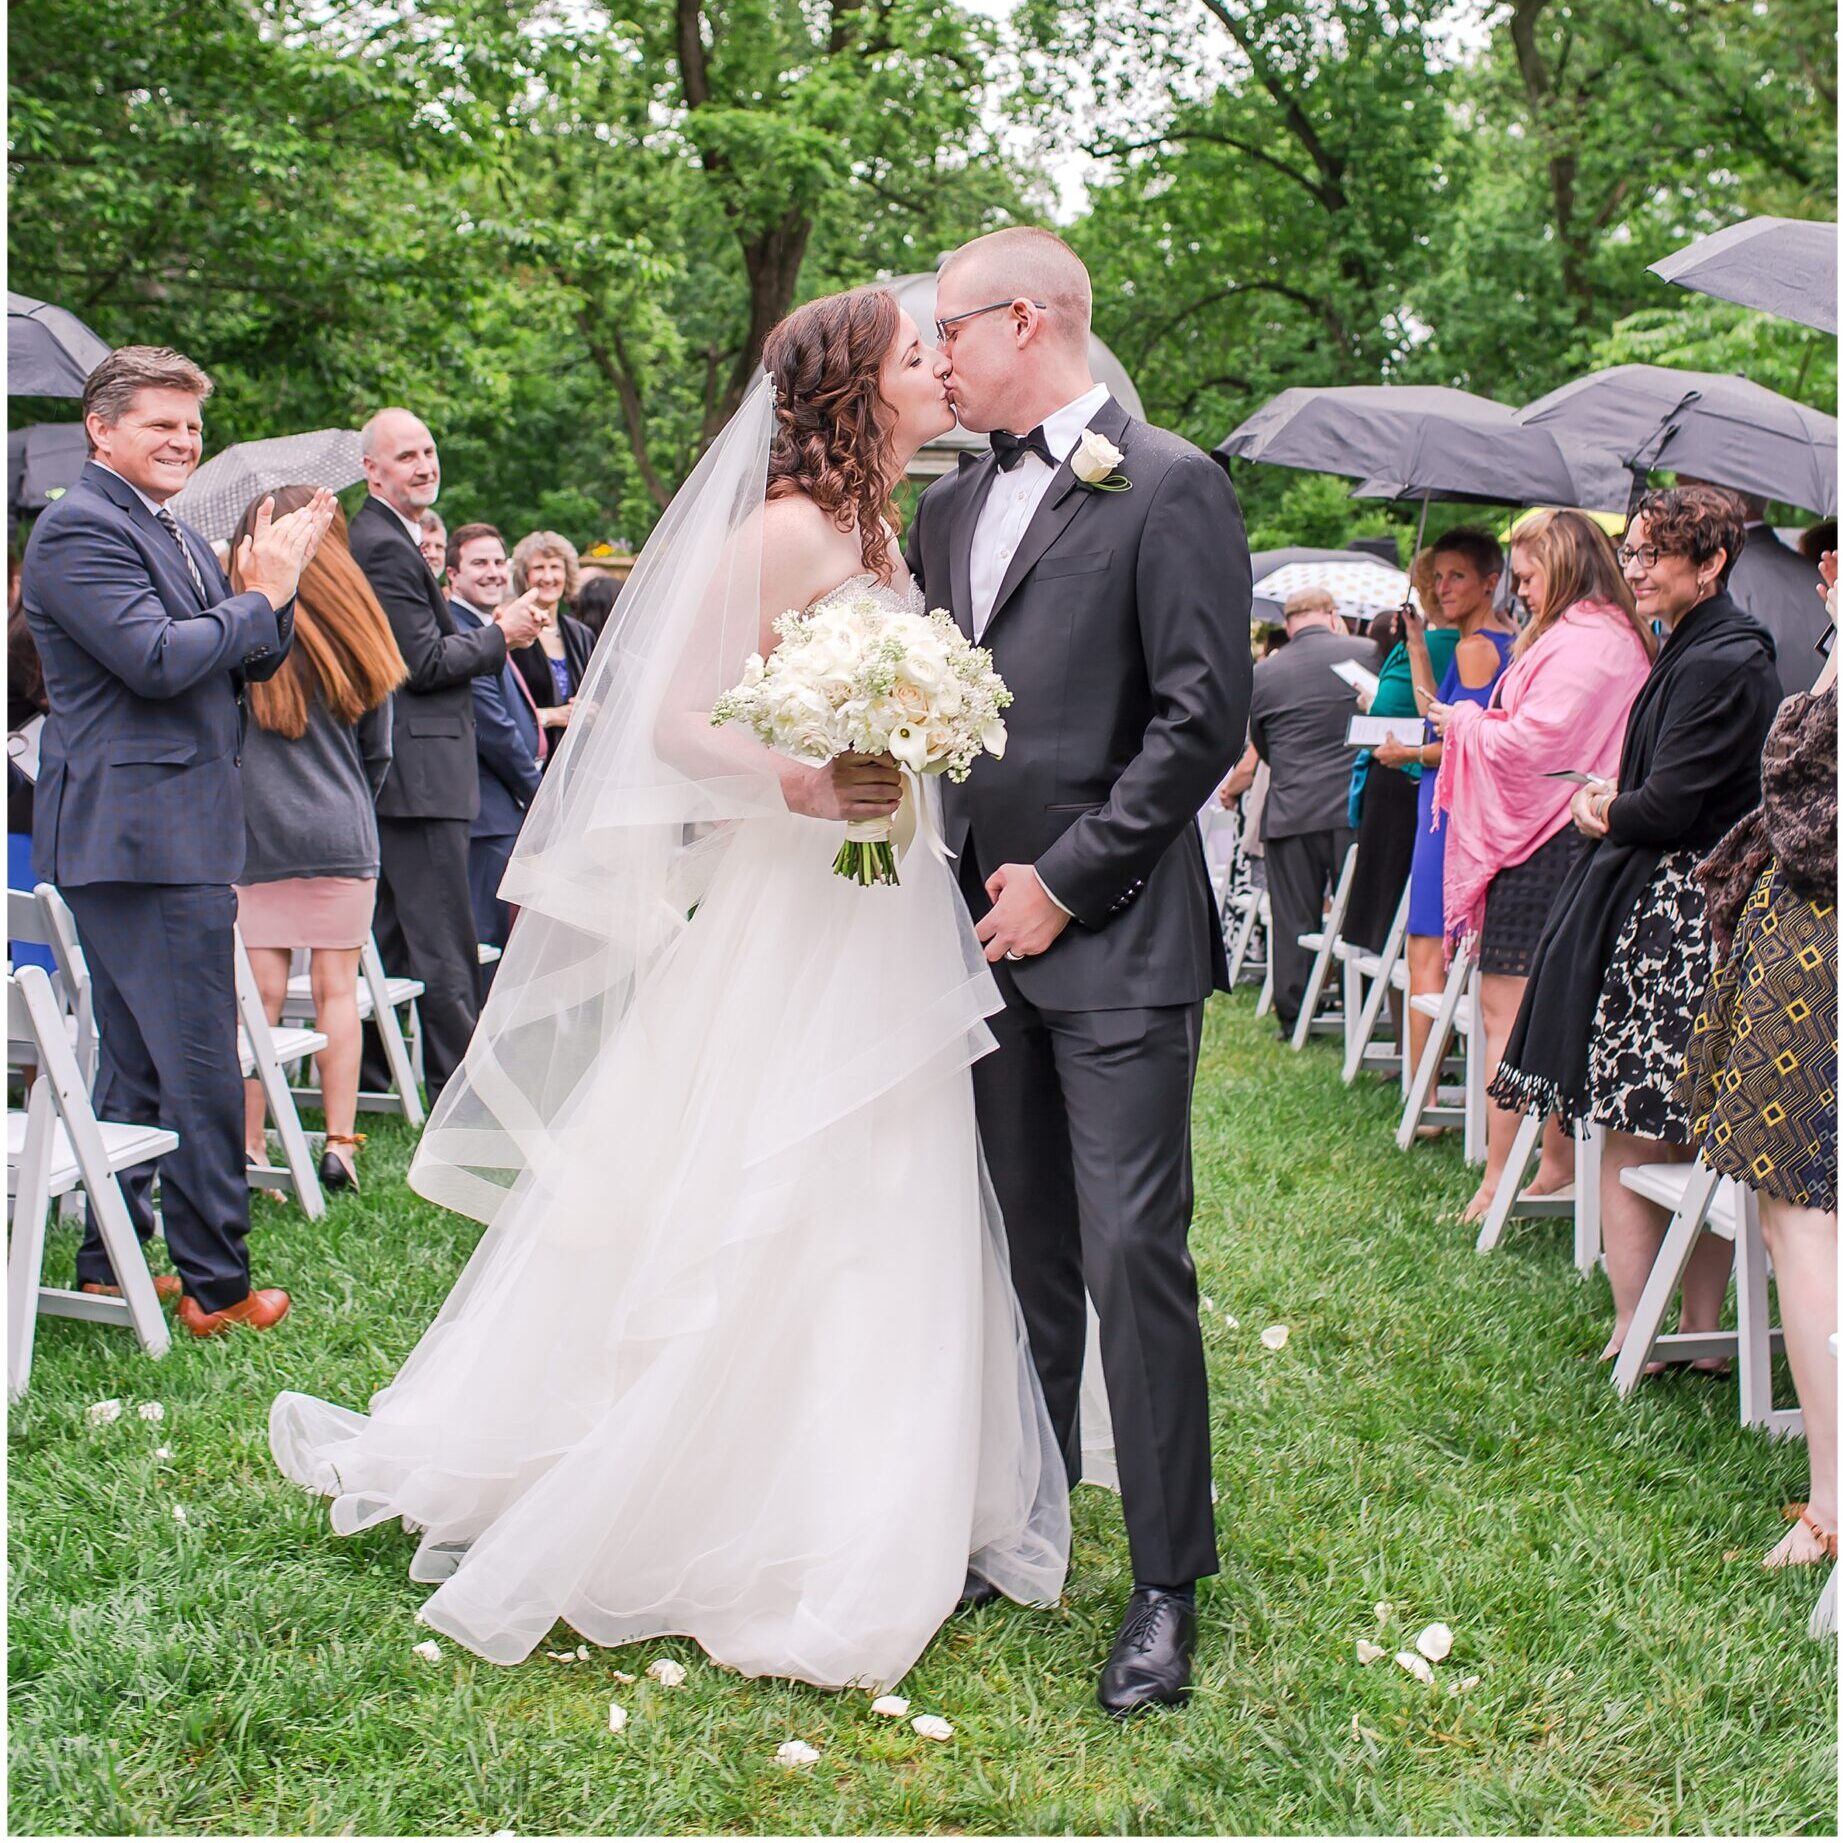 rain-wedding-outside-just-married-kiss